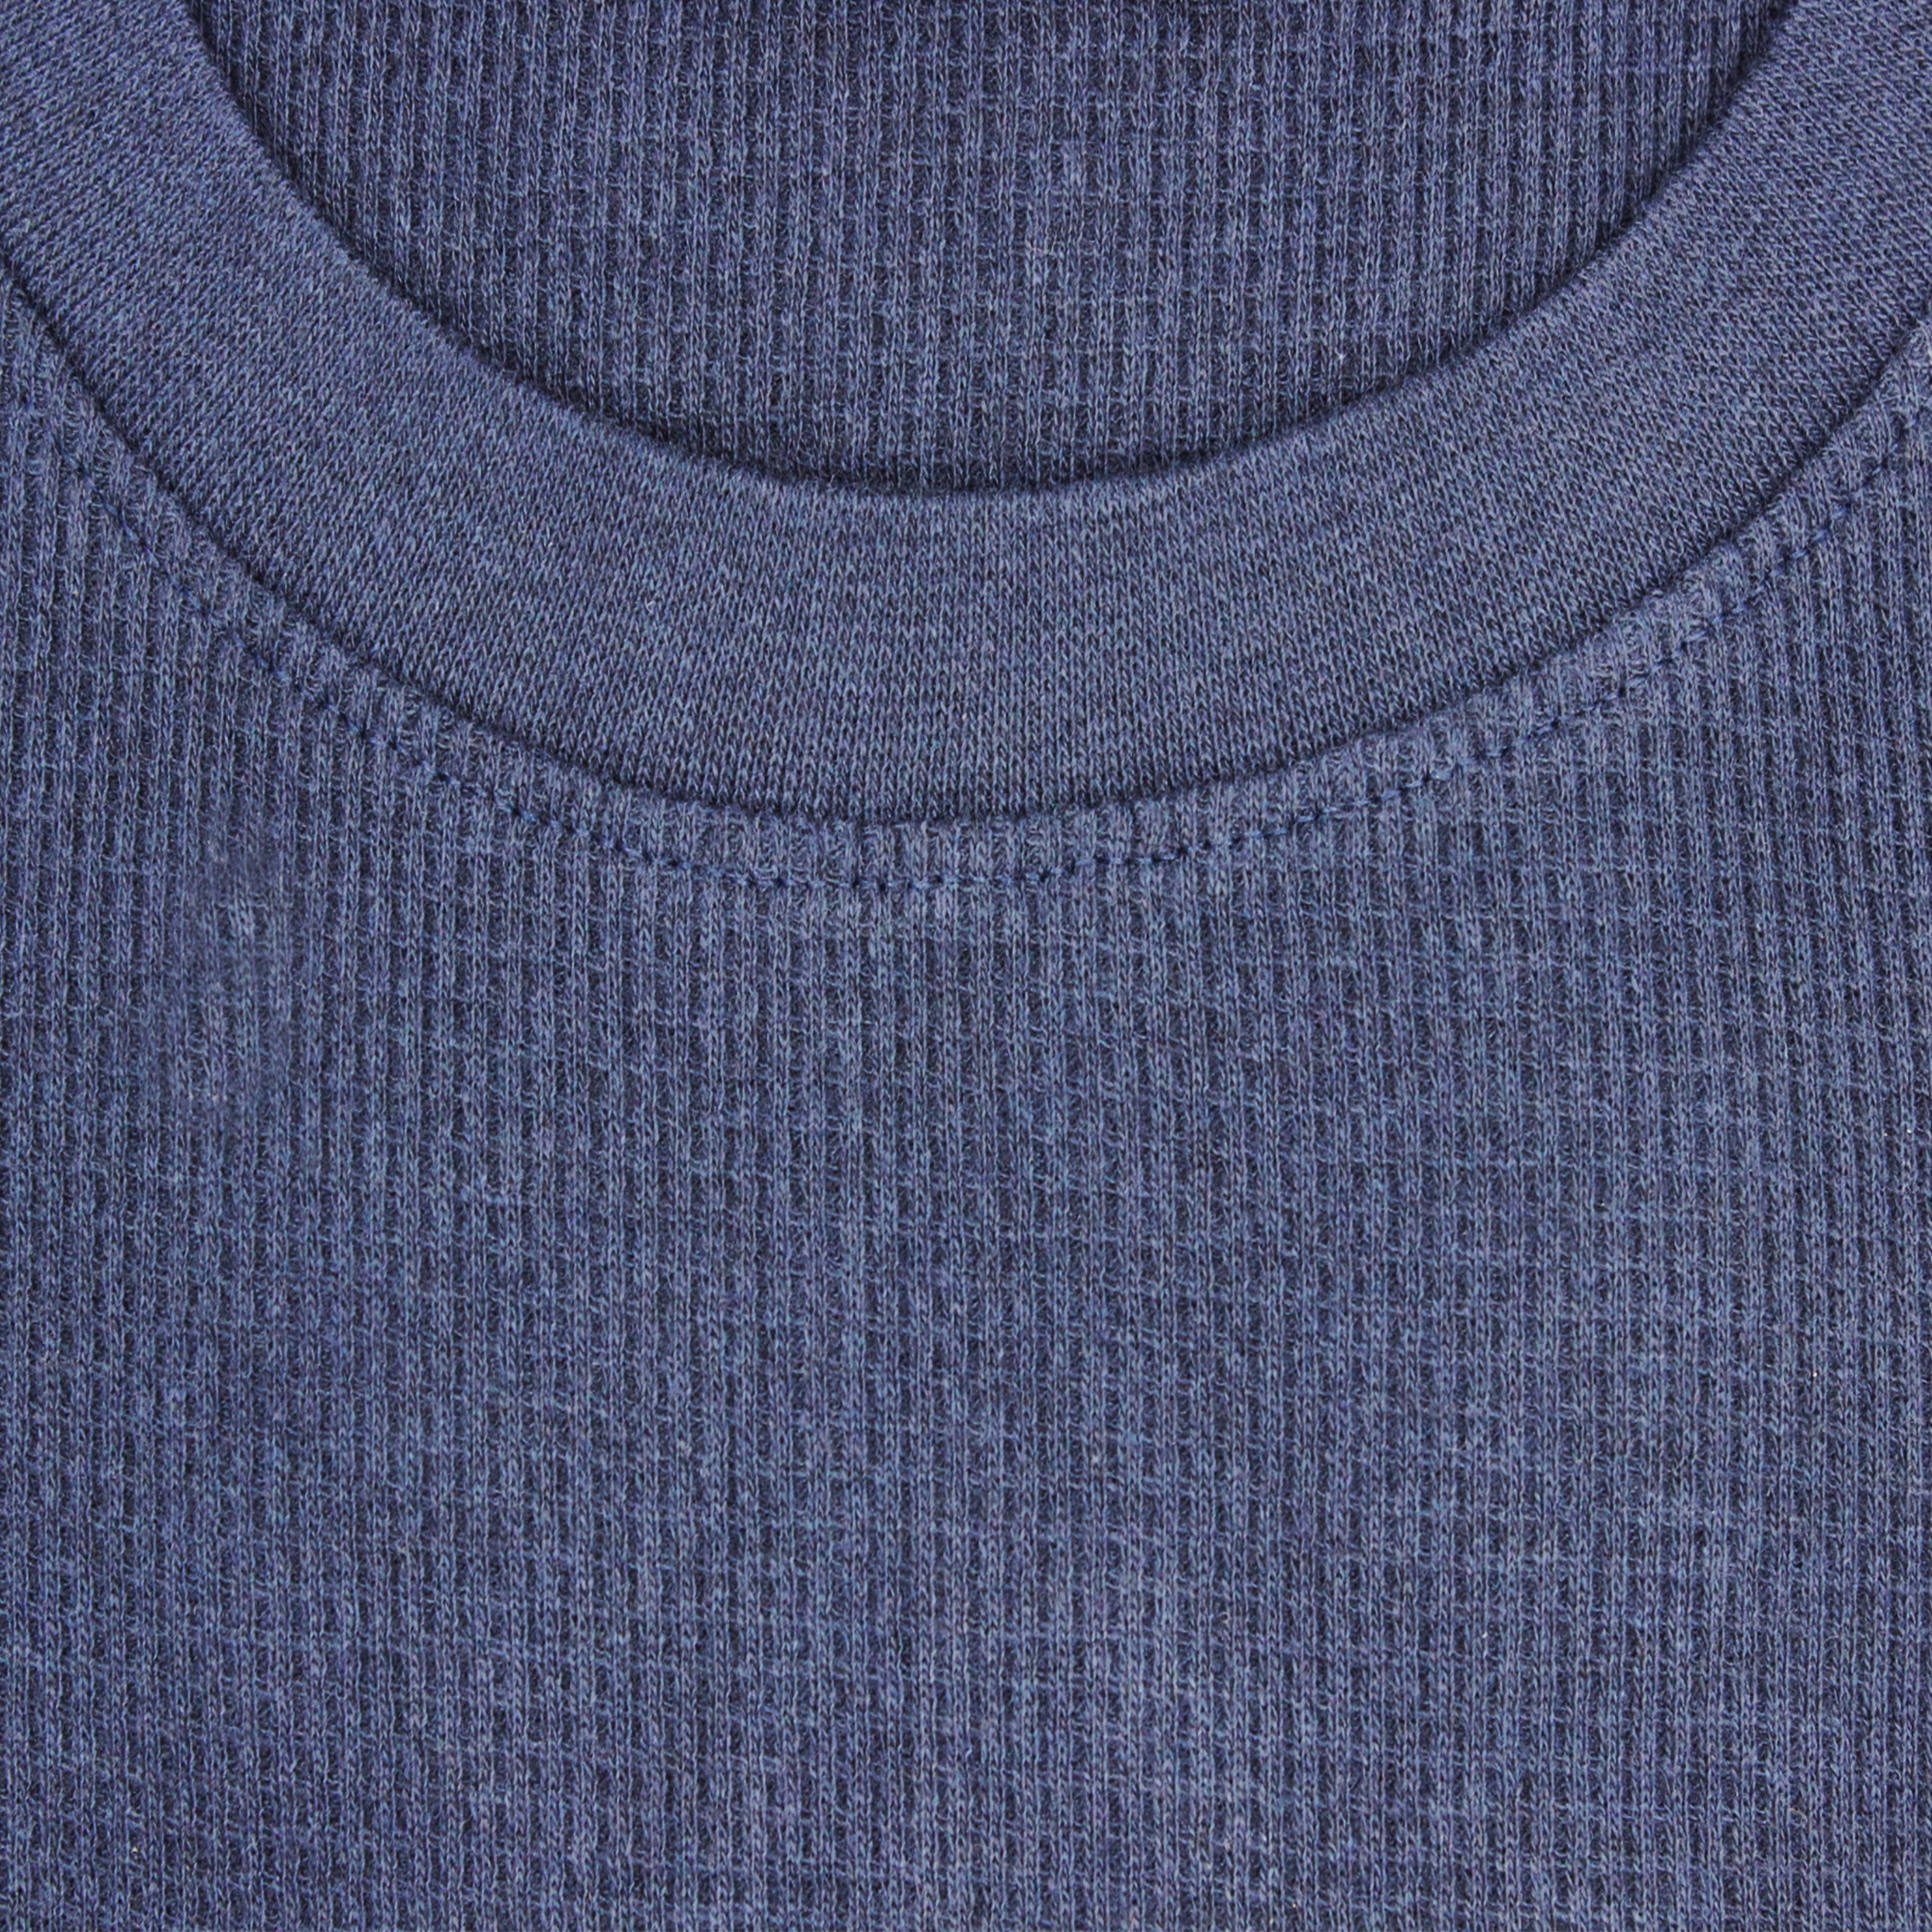 Knocker Mens 100% Cotton Thermal Top Waffle Knit Henley Undershirt Basic  Layer